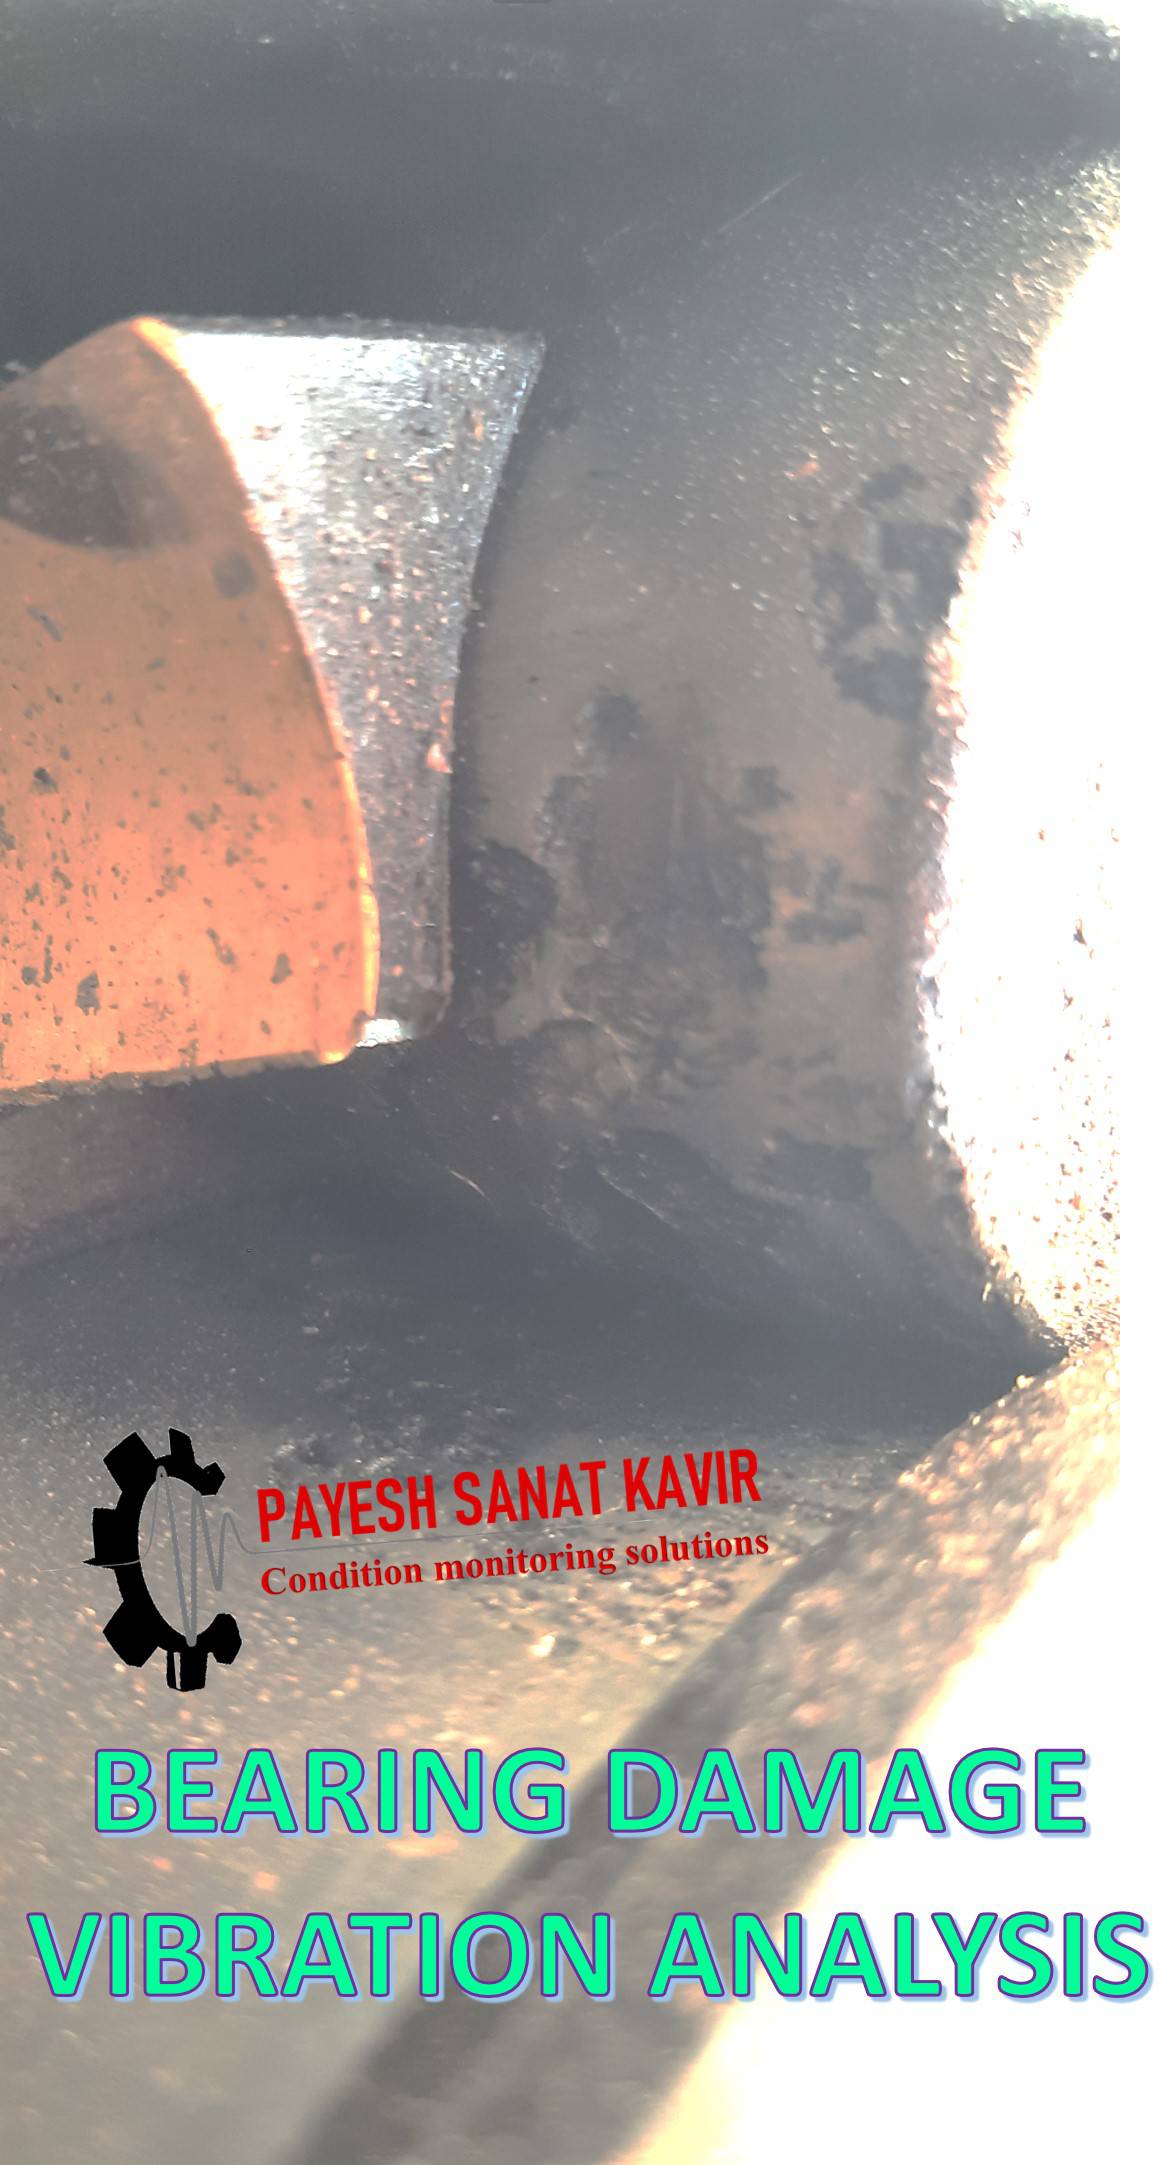 Bearing Vibration Condition Monitoring - پایش وضعیت ارتعاش بیرینگ ها- پایش صنعت کویر- نماینده رسمی موسسه موبیوس- Payesh Sanat Kavir Institute-Authorized Mobius Institute Partner